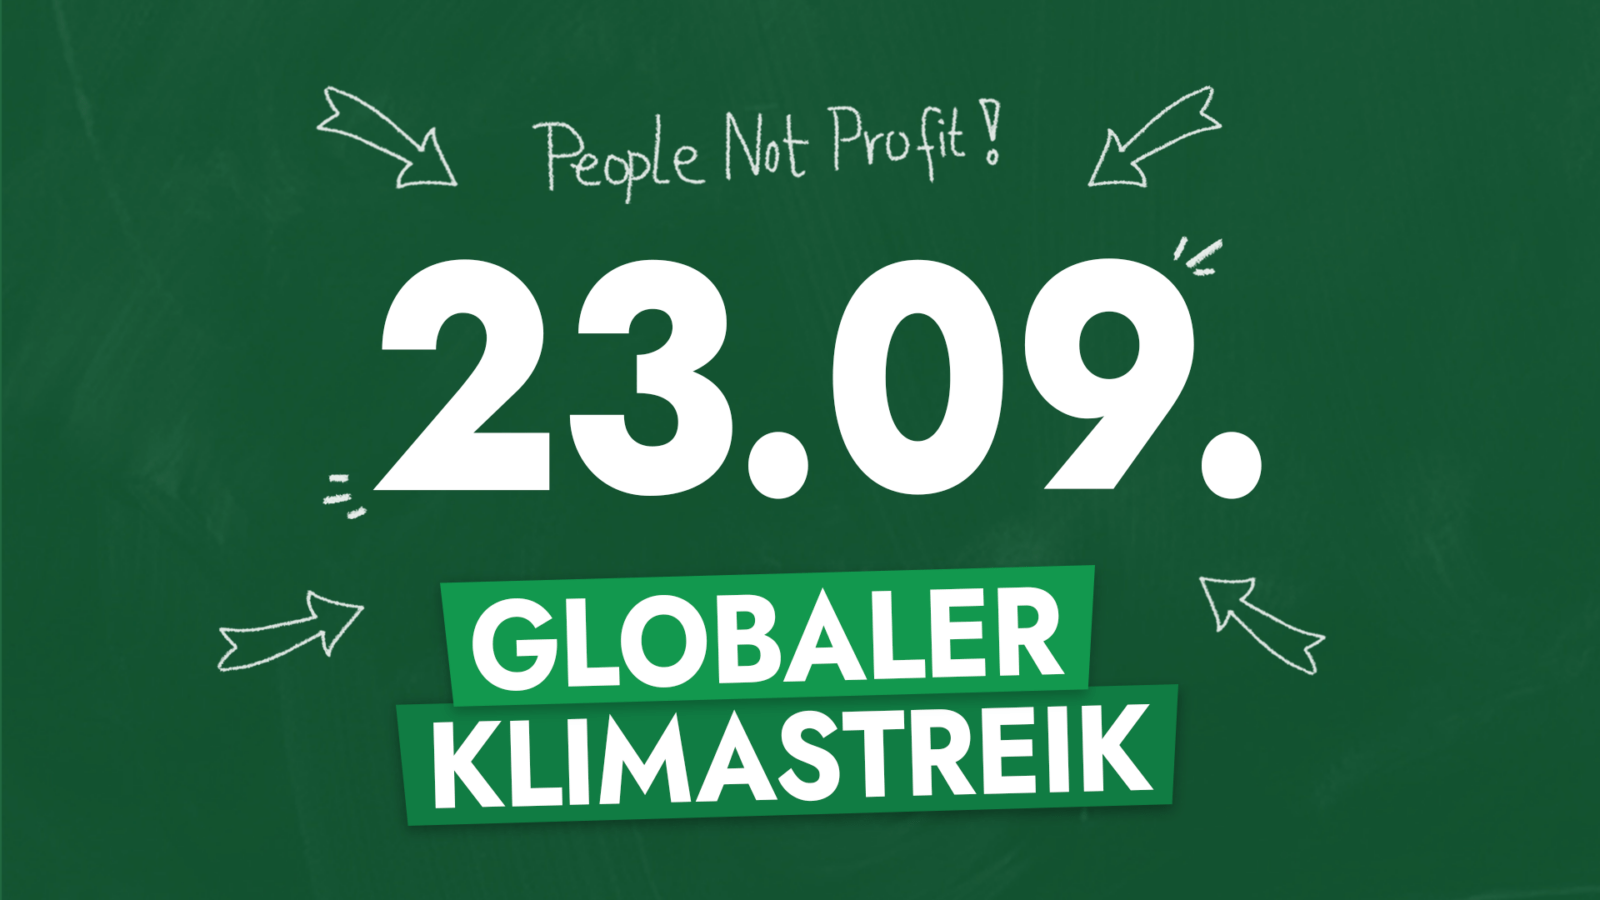 GLOBALER KLIMASTREIK AM 23. SEPTEMBER 2022